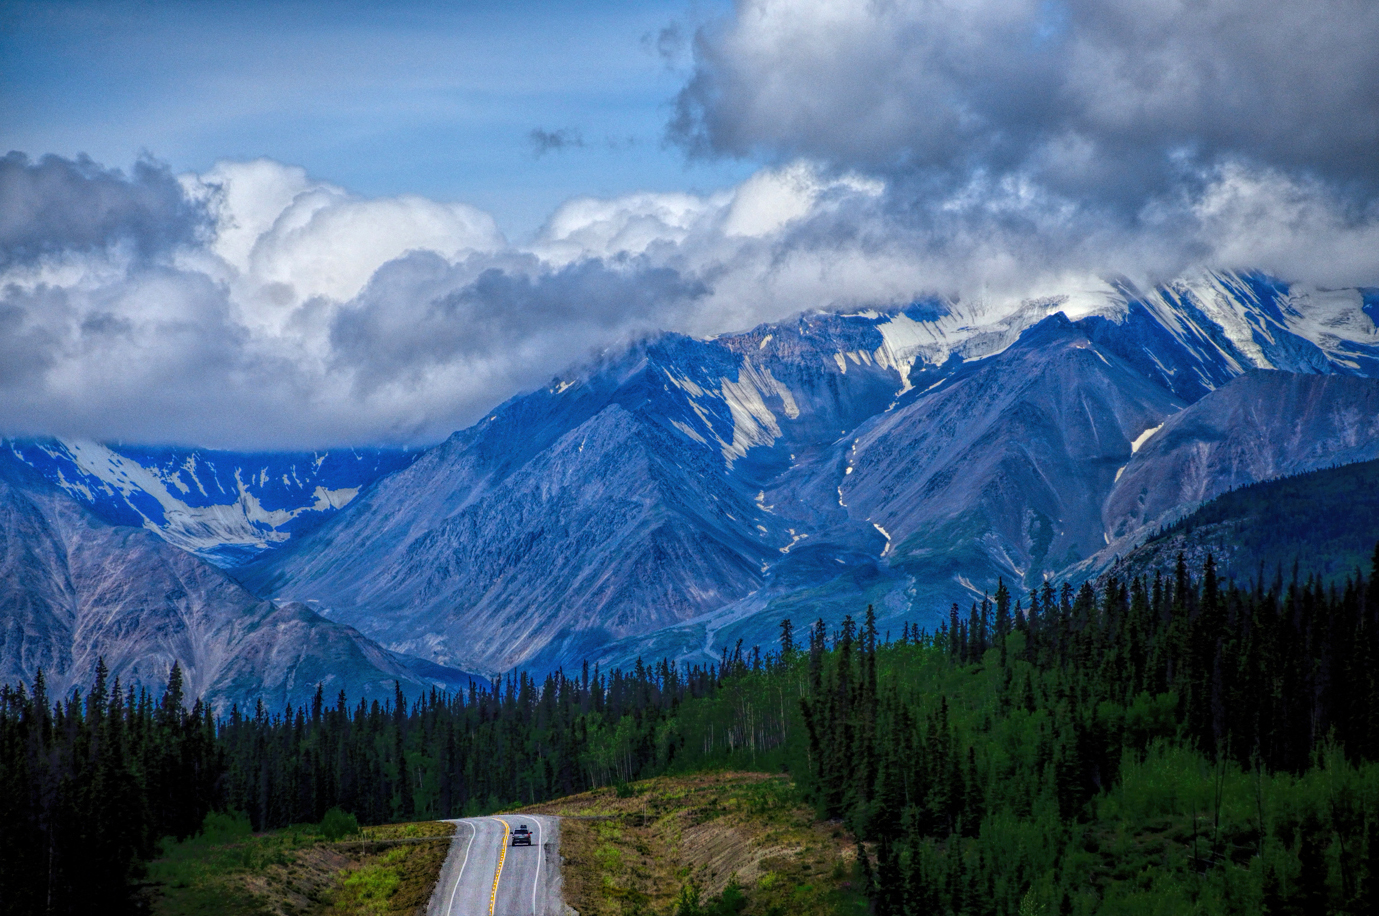 Alaska: Looking Back on the Drive